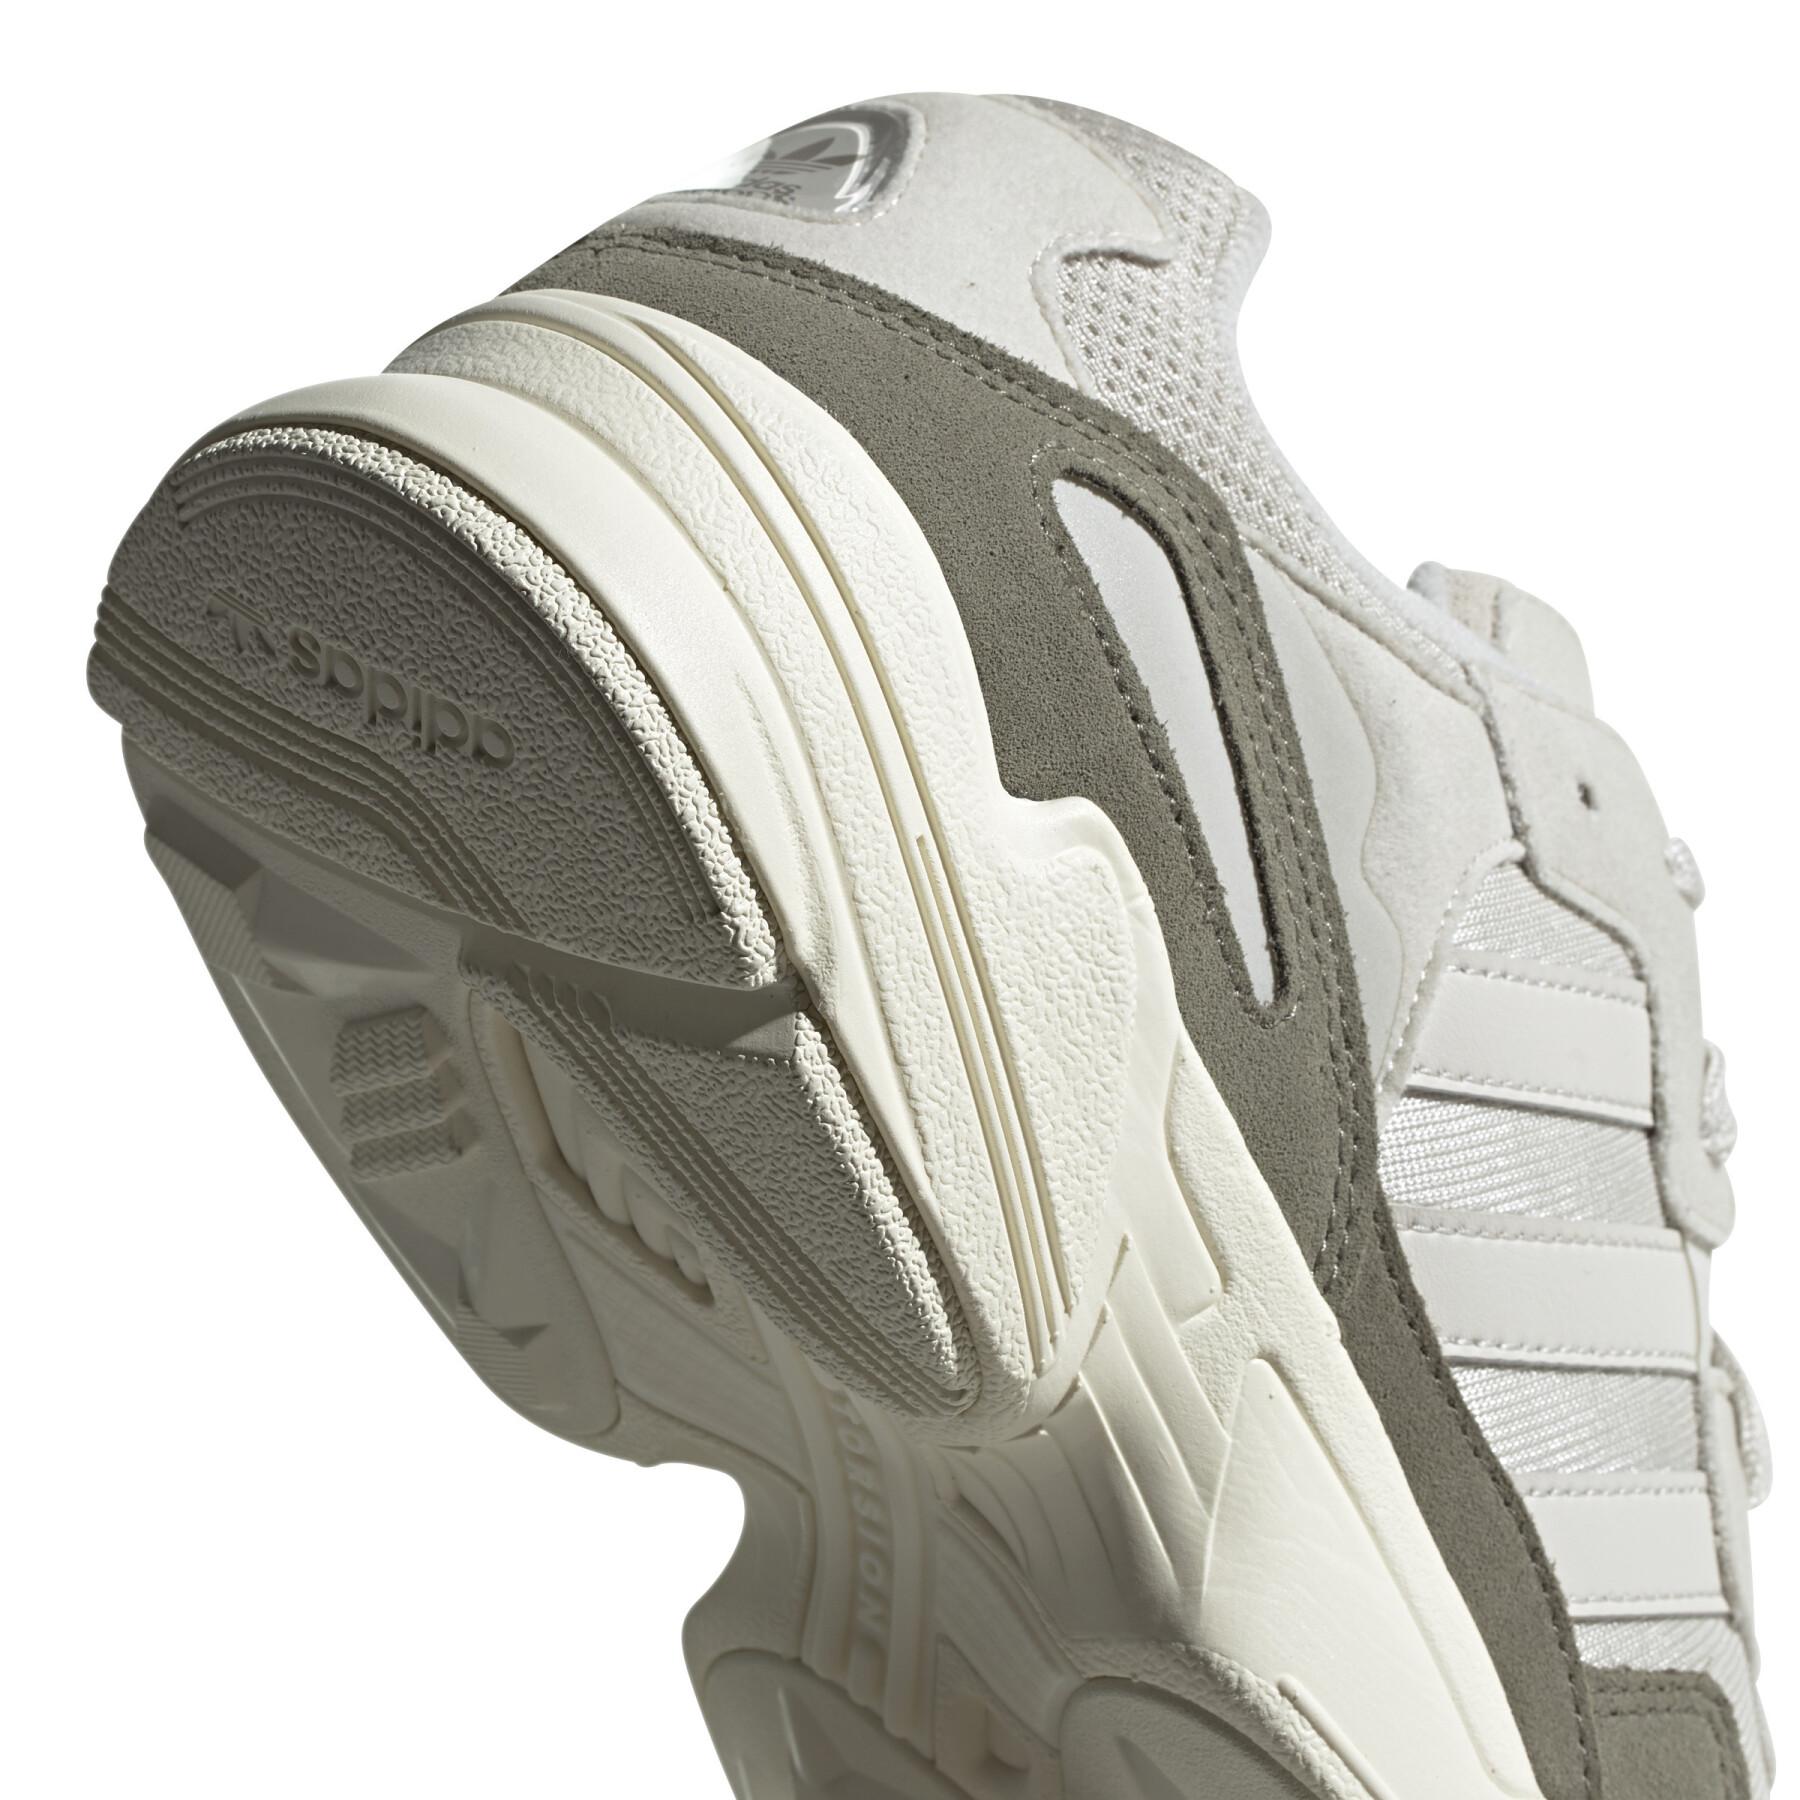 Sneakers adidas Originals Yung-96